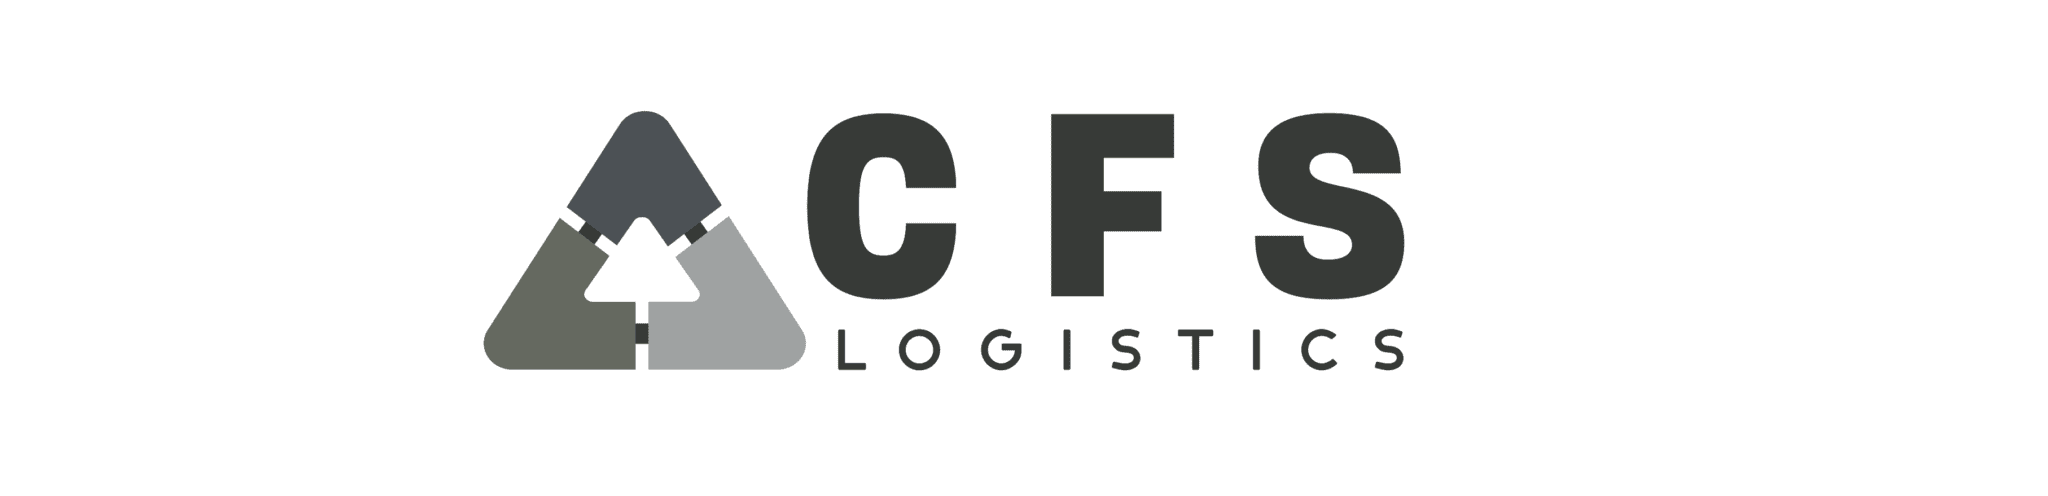 CFS_Base logos pagina web_Mesa de trabajo 1